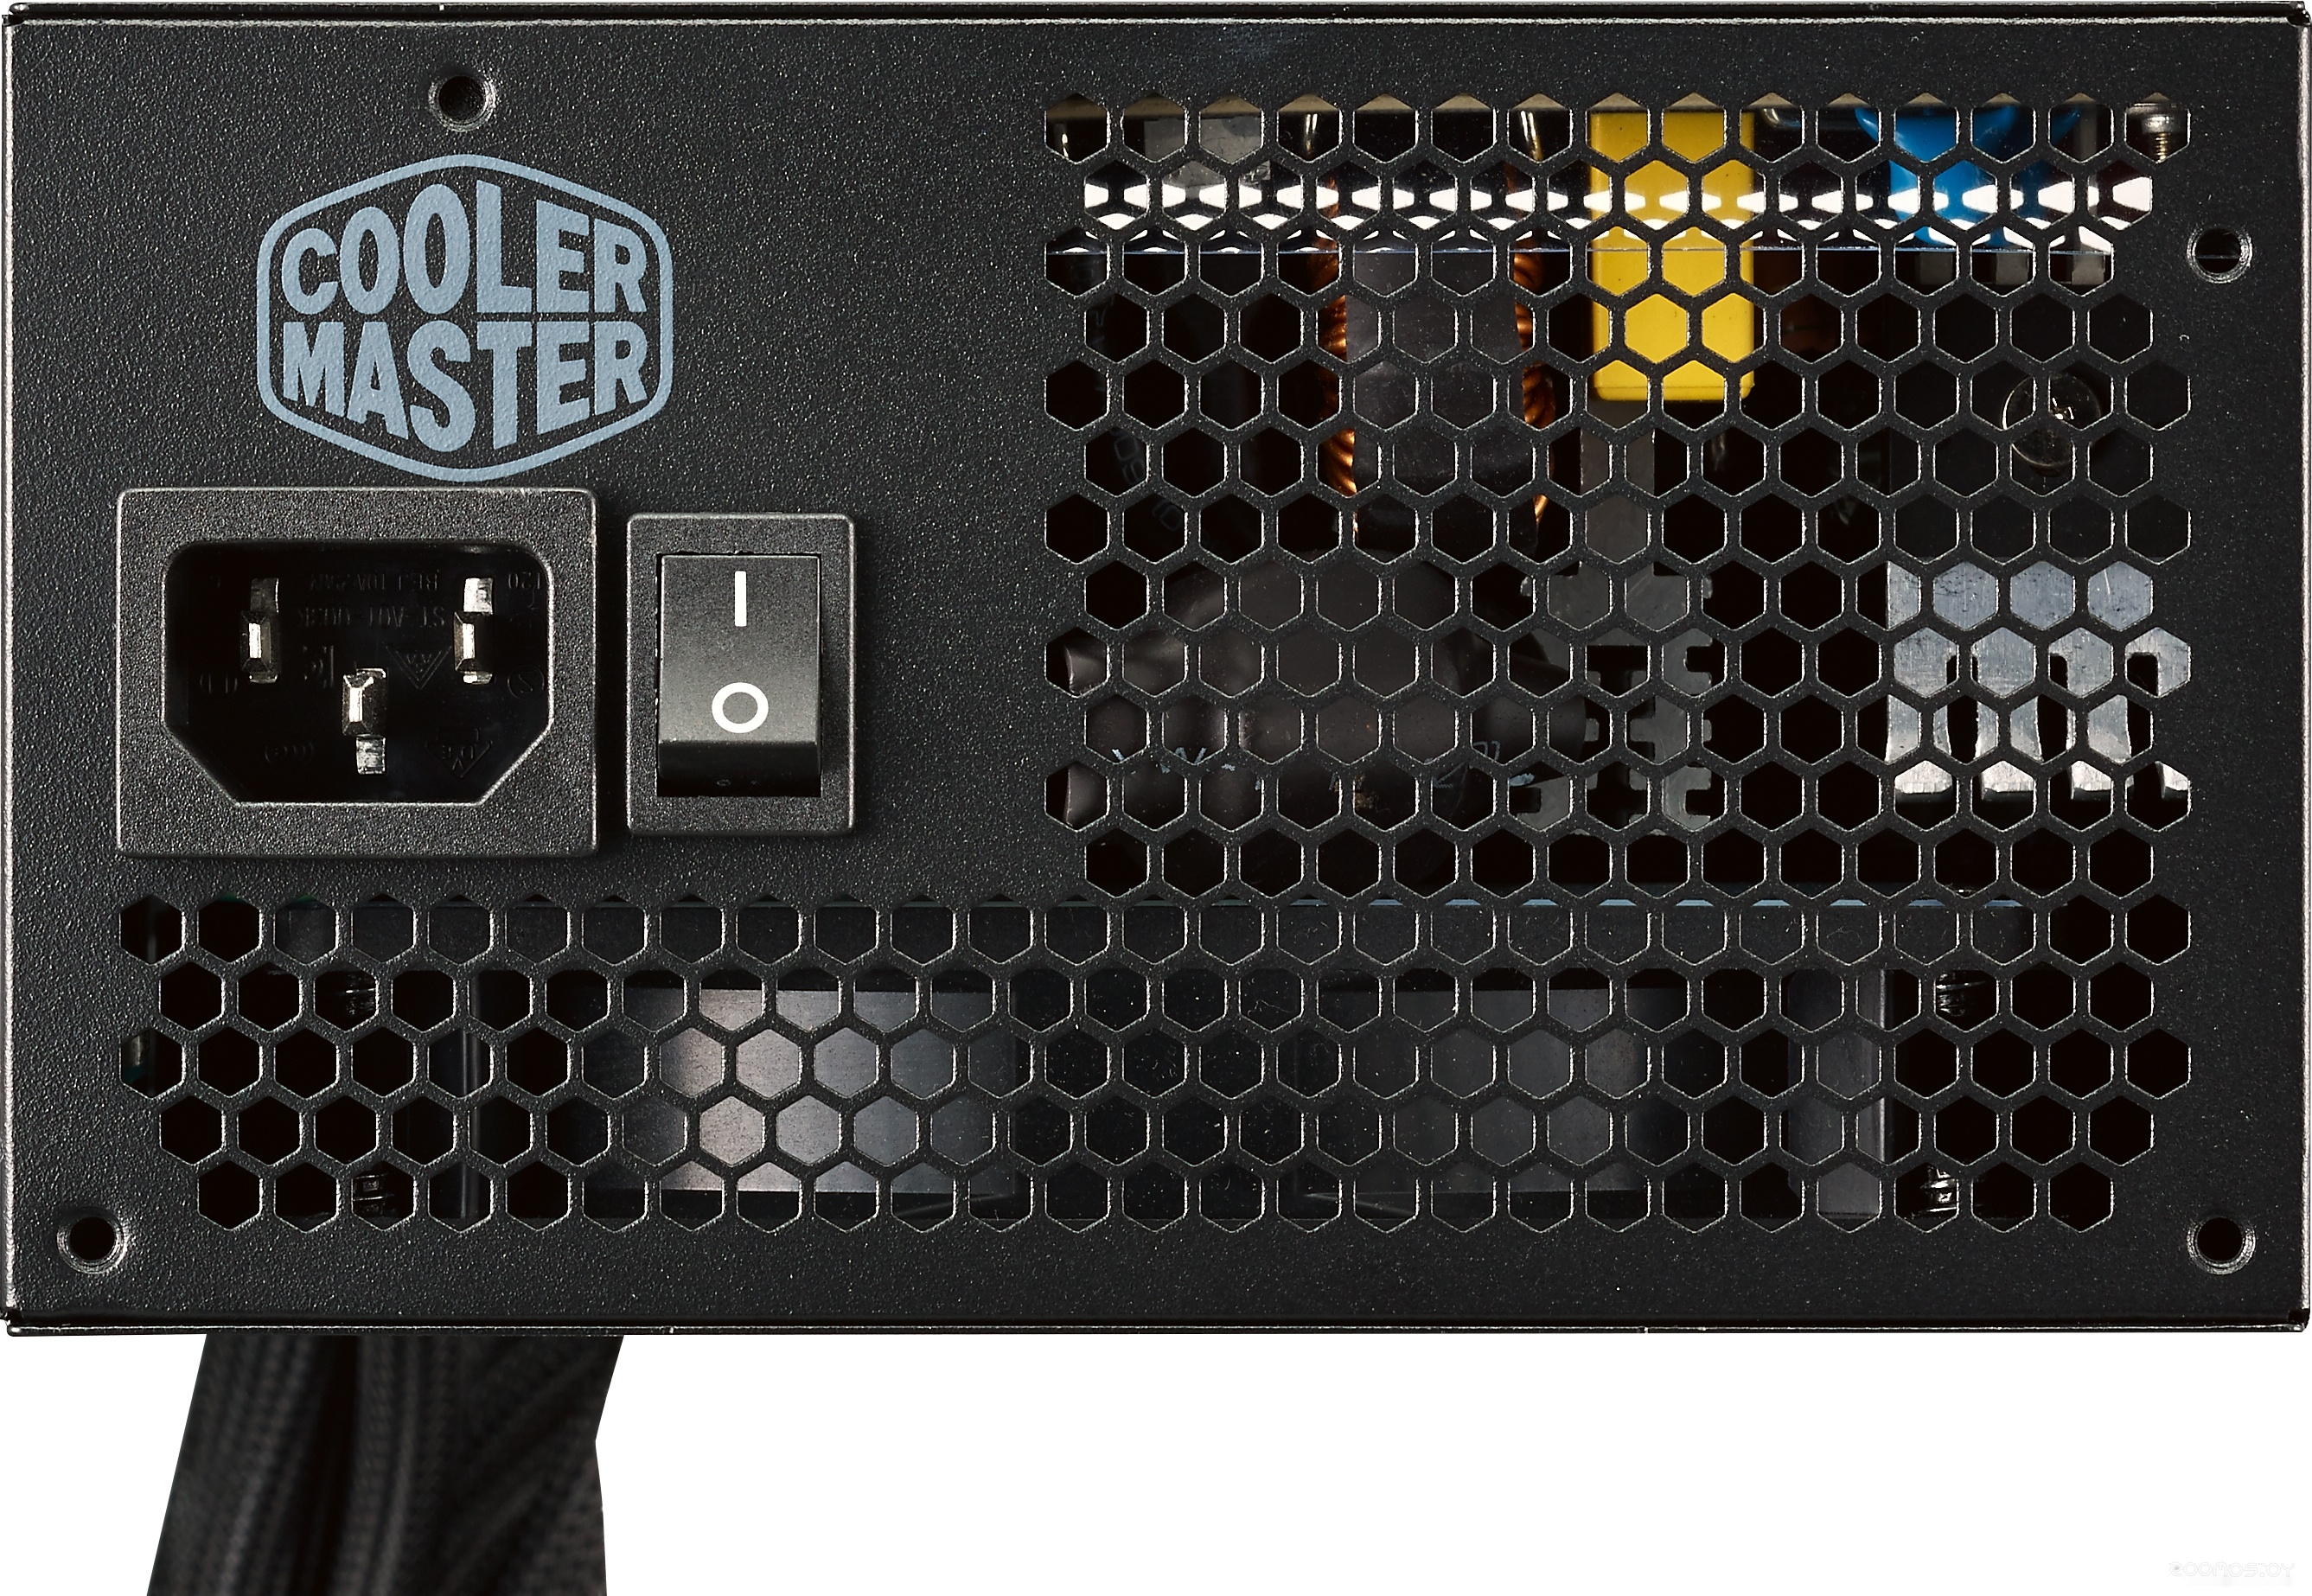   Cooler Master MasterWatt 550 MPX-5501-AMAAB     